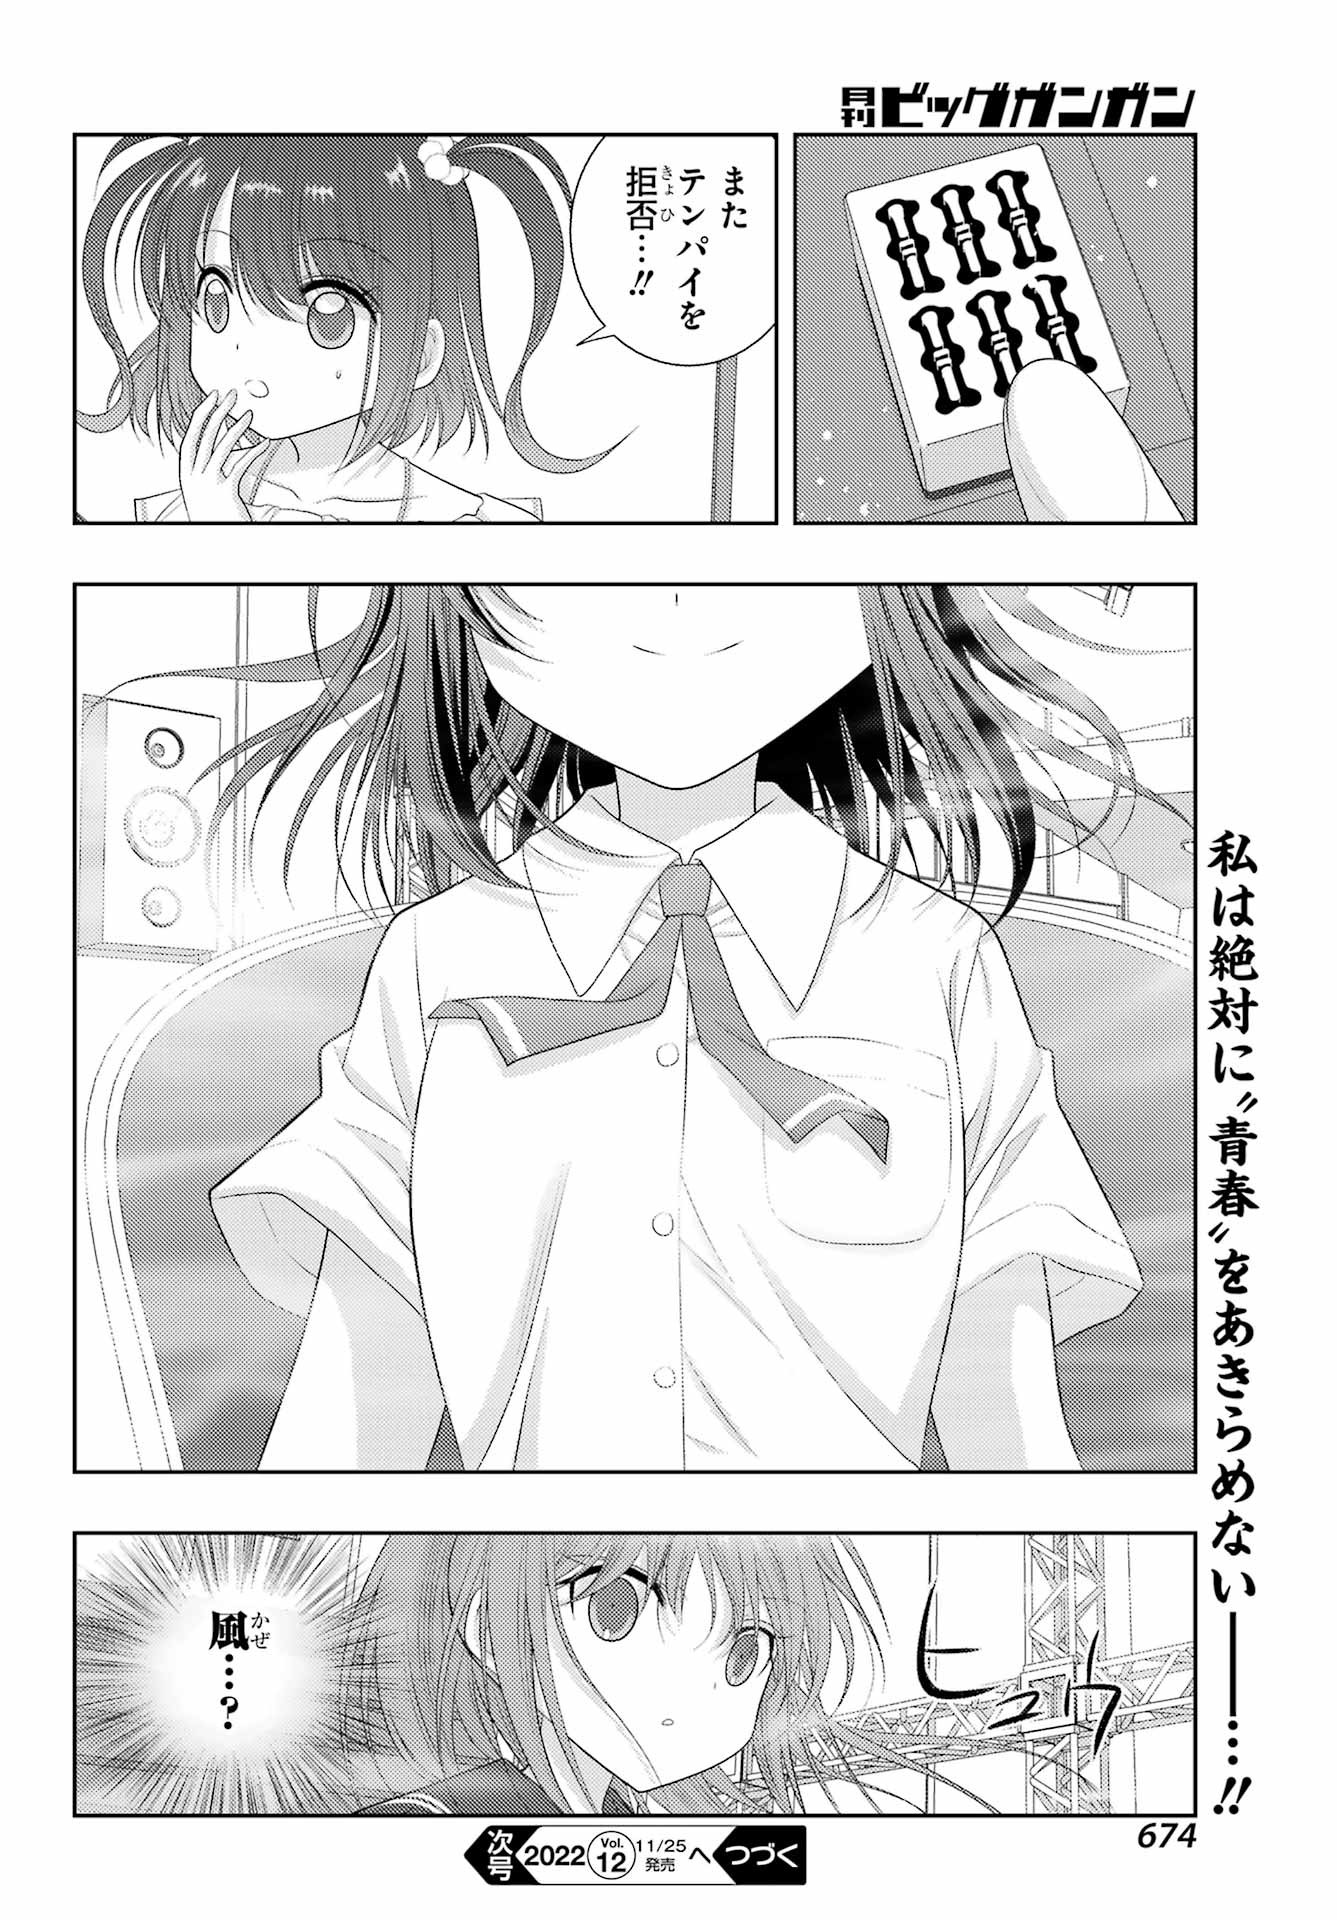 Shinohayu - The Dawn of Age Manga - Chapter 099 - Page 20